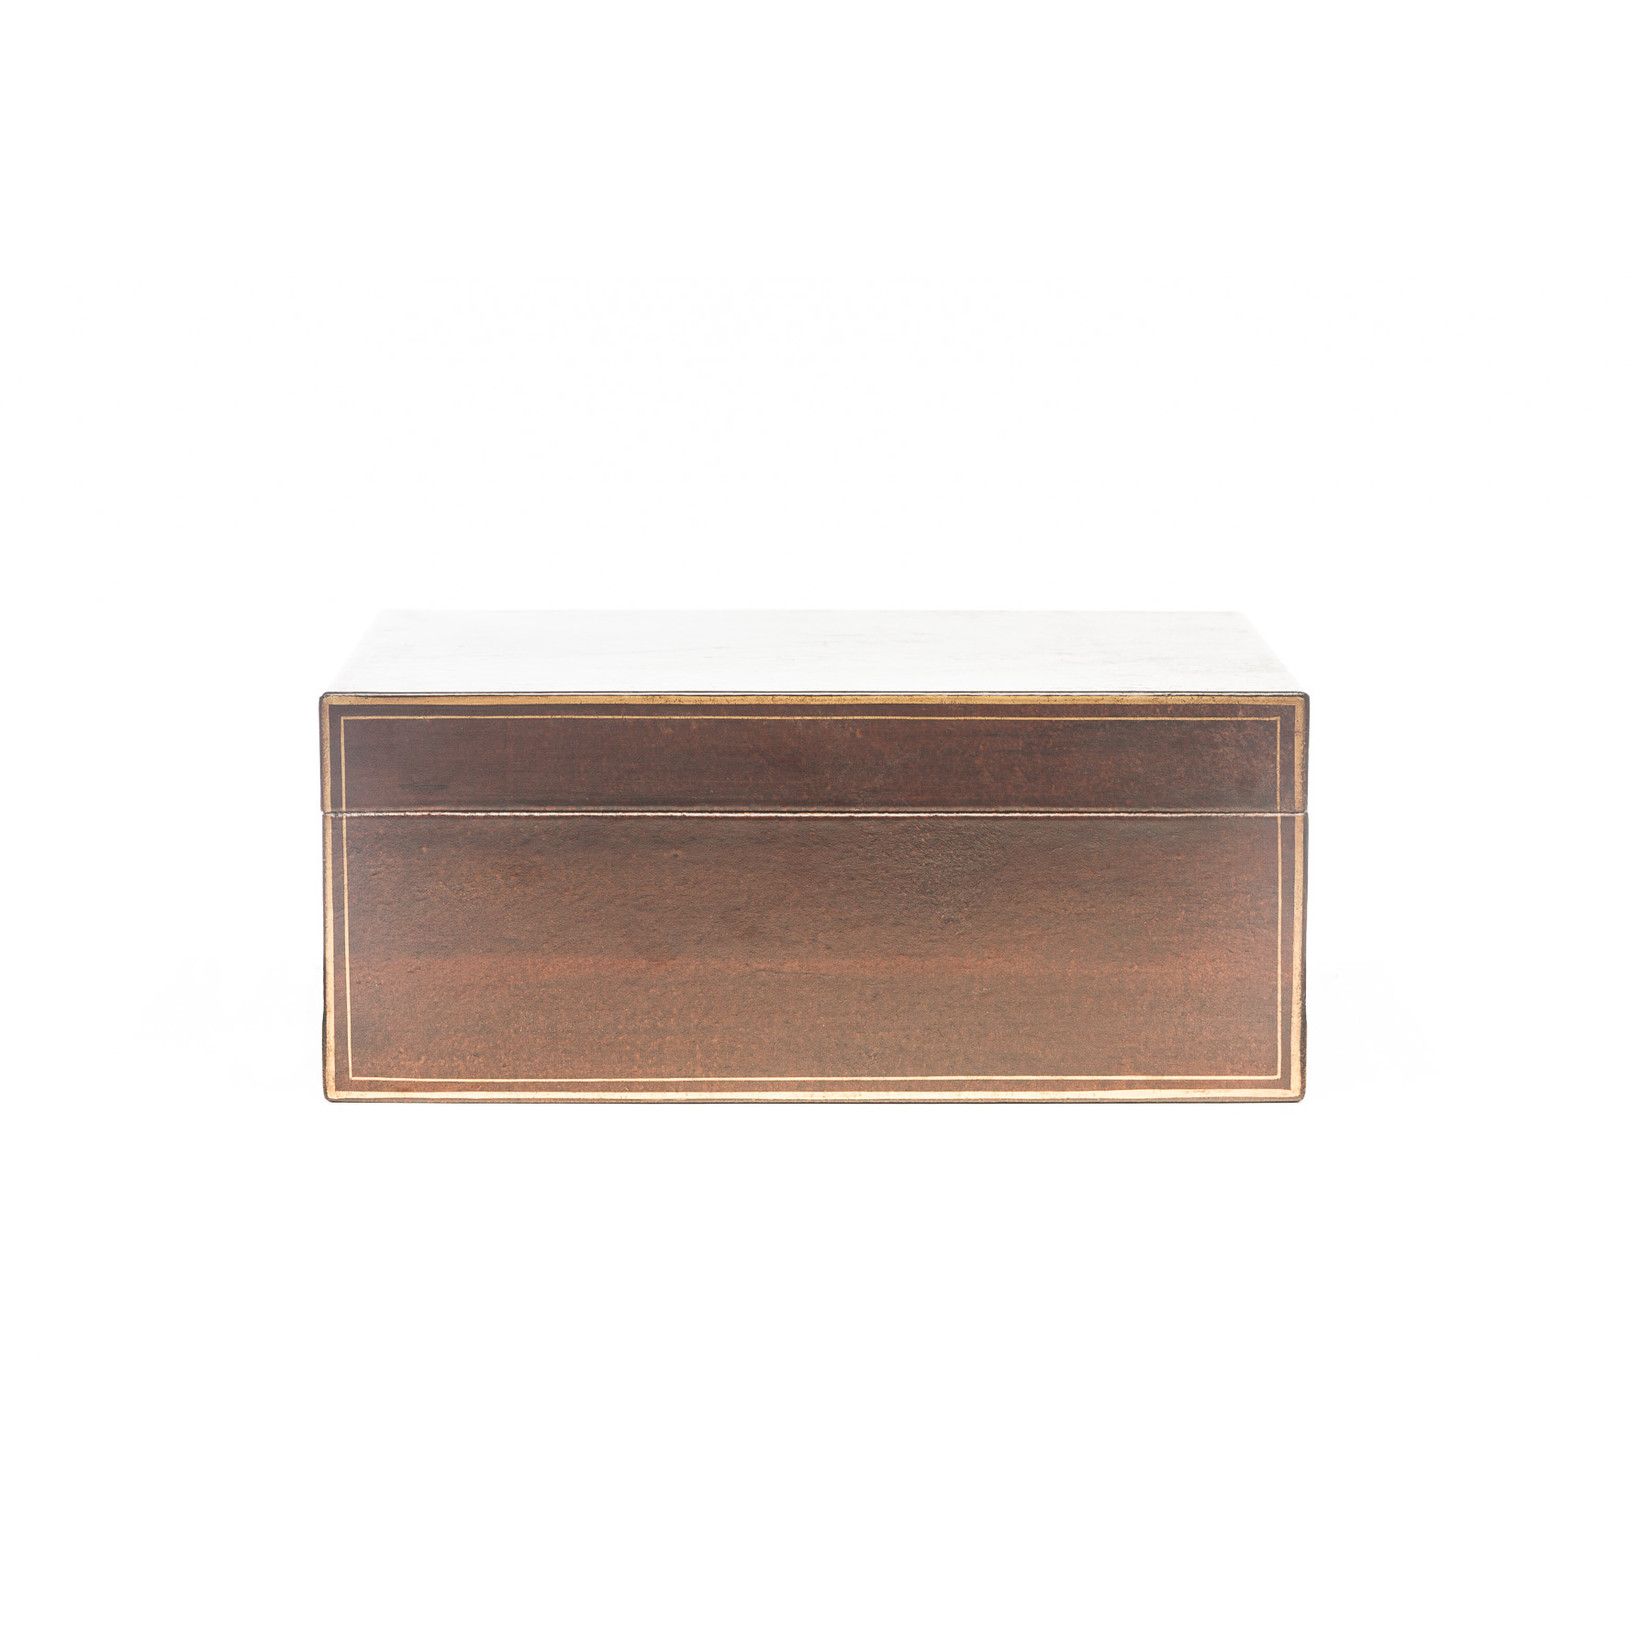 Lawrence & Scott Mahogany Regalia Leather Box(16.5") with Hand-Painted tuxedo gold trim